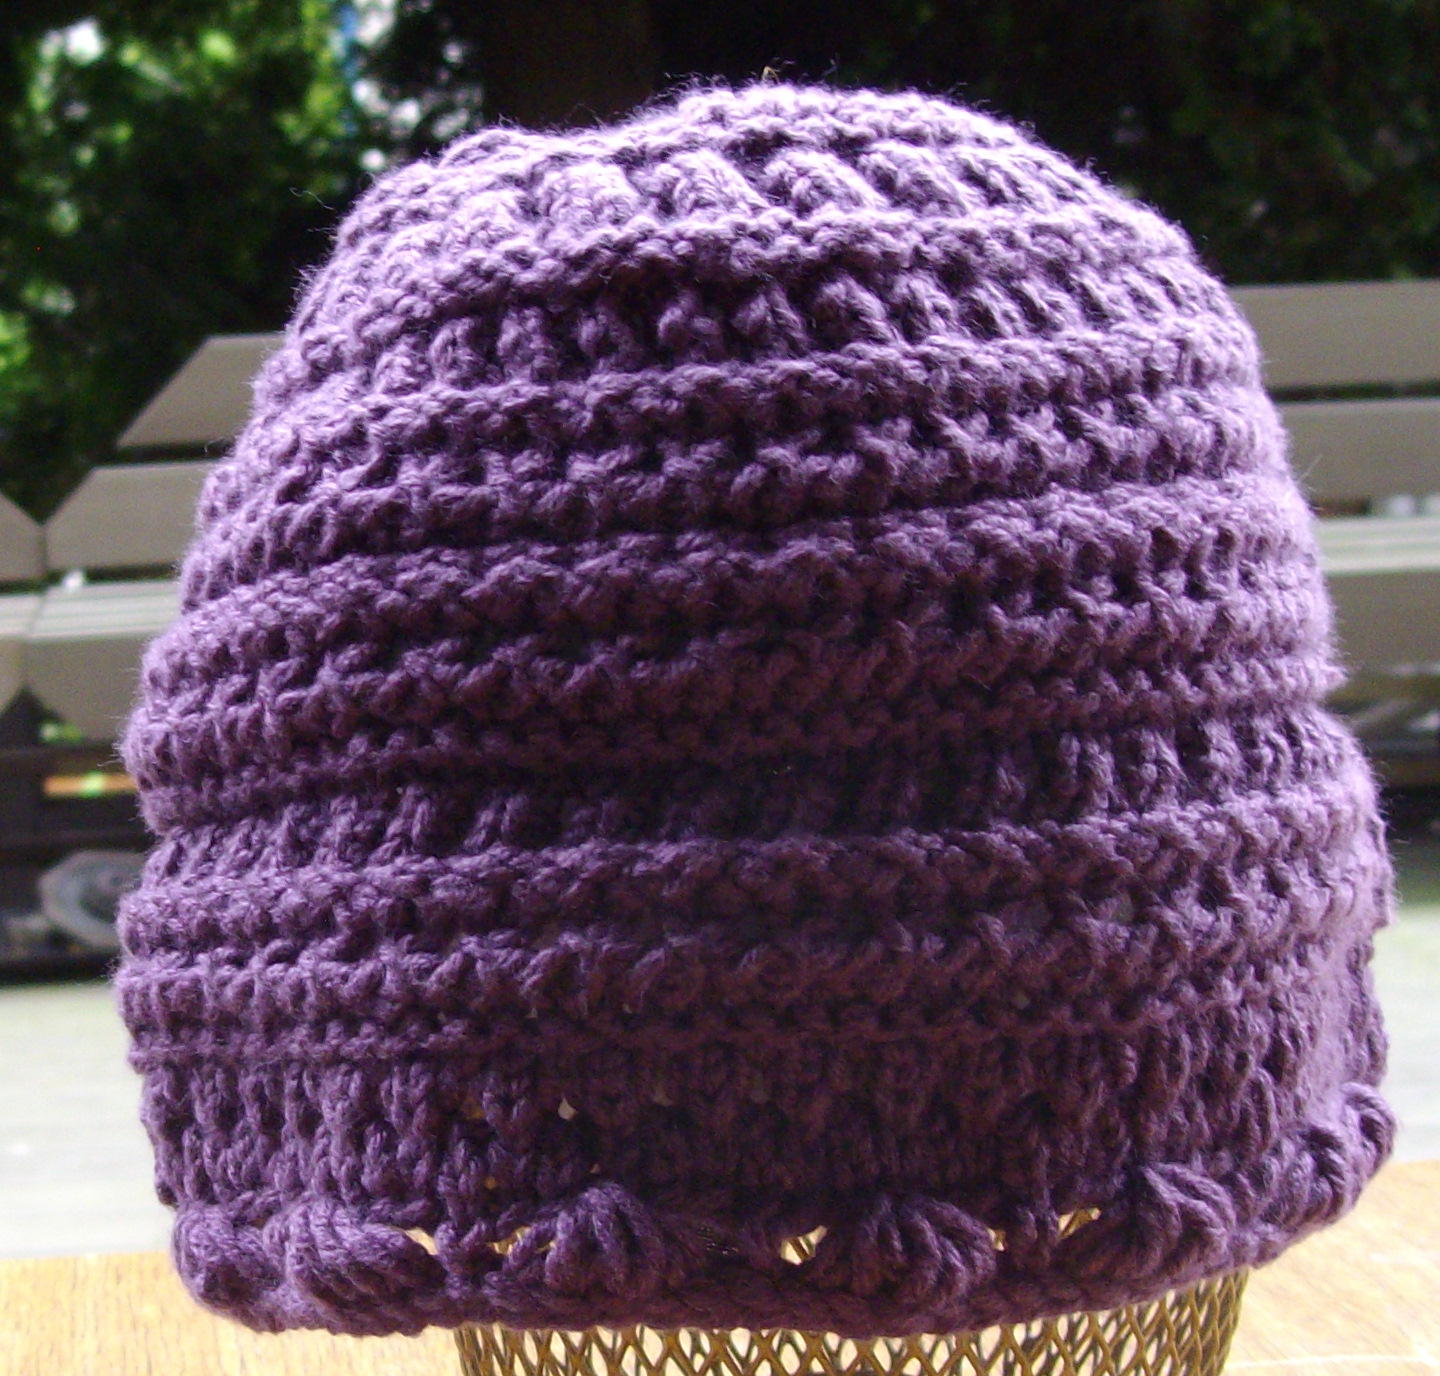 Raglan short sleeve cable top. LK150 knitting machine, no pattern, DK  weight cotton yarn. : r/MachineKnitting